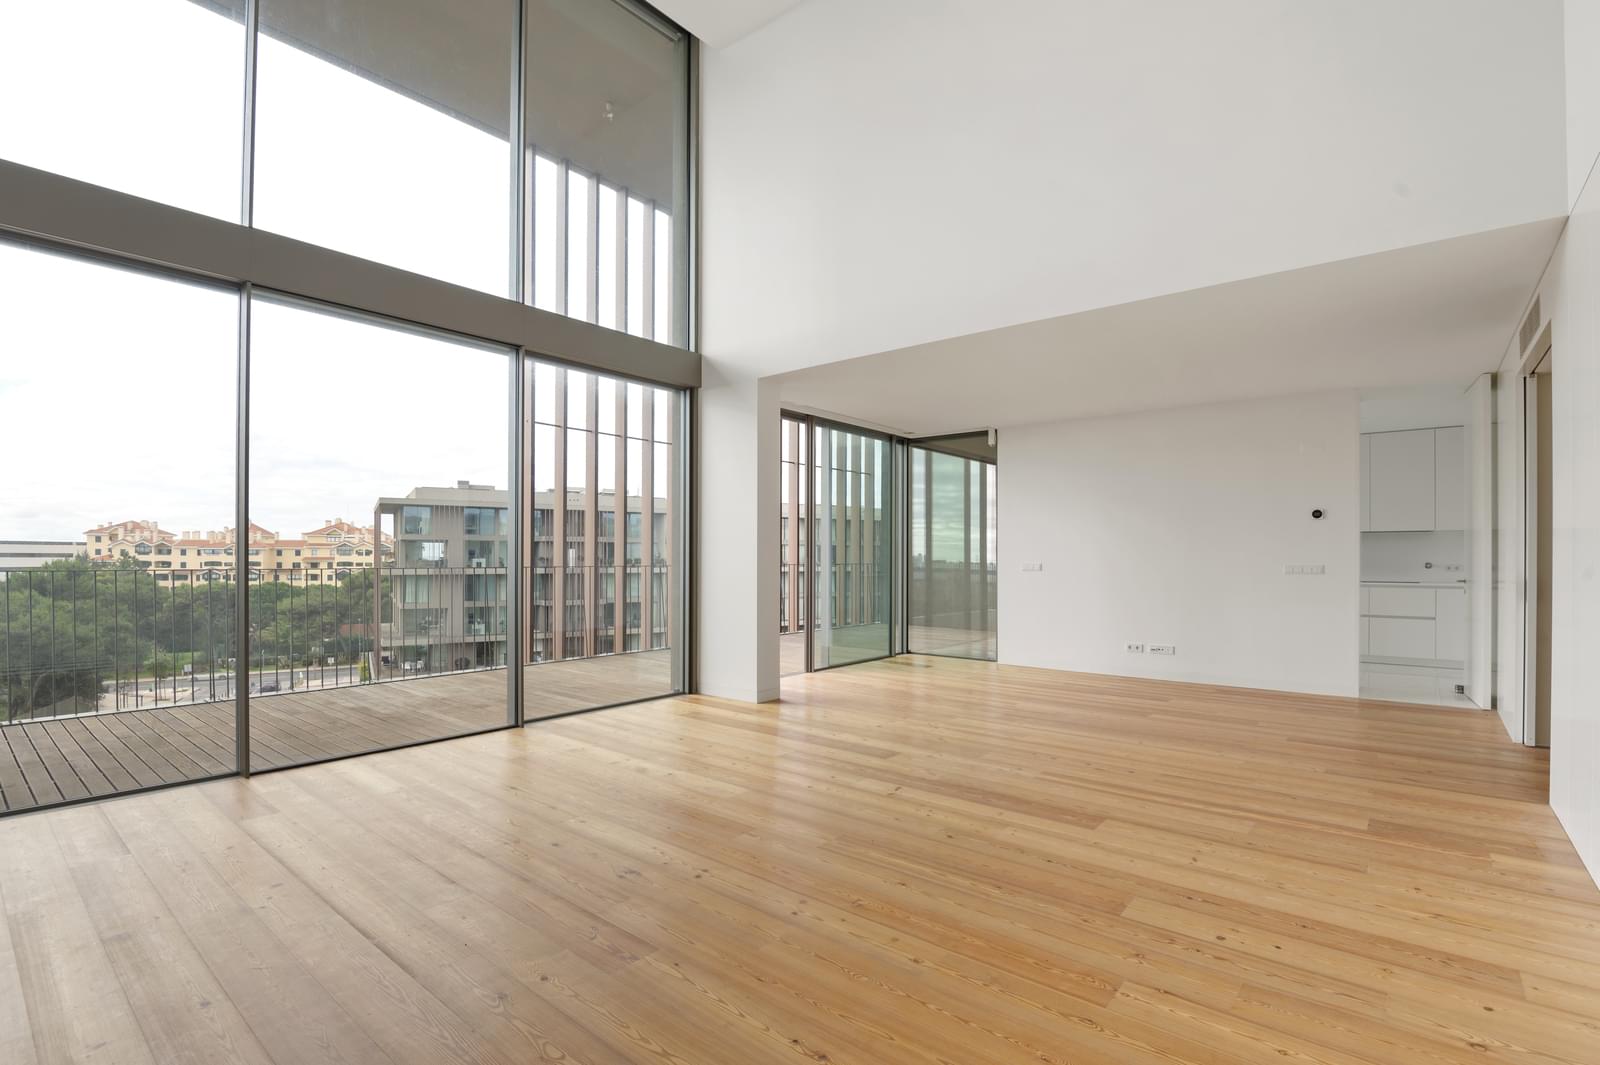 Apartment for sale in Cascais and Estoril 2